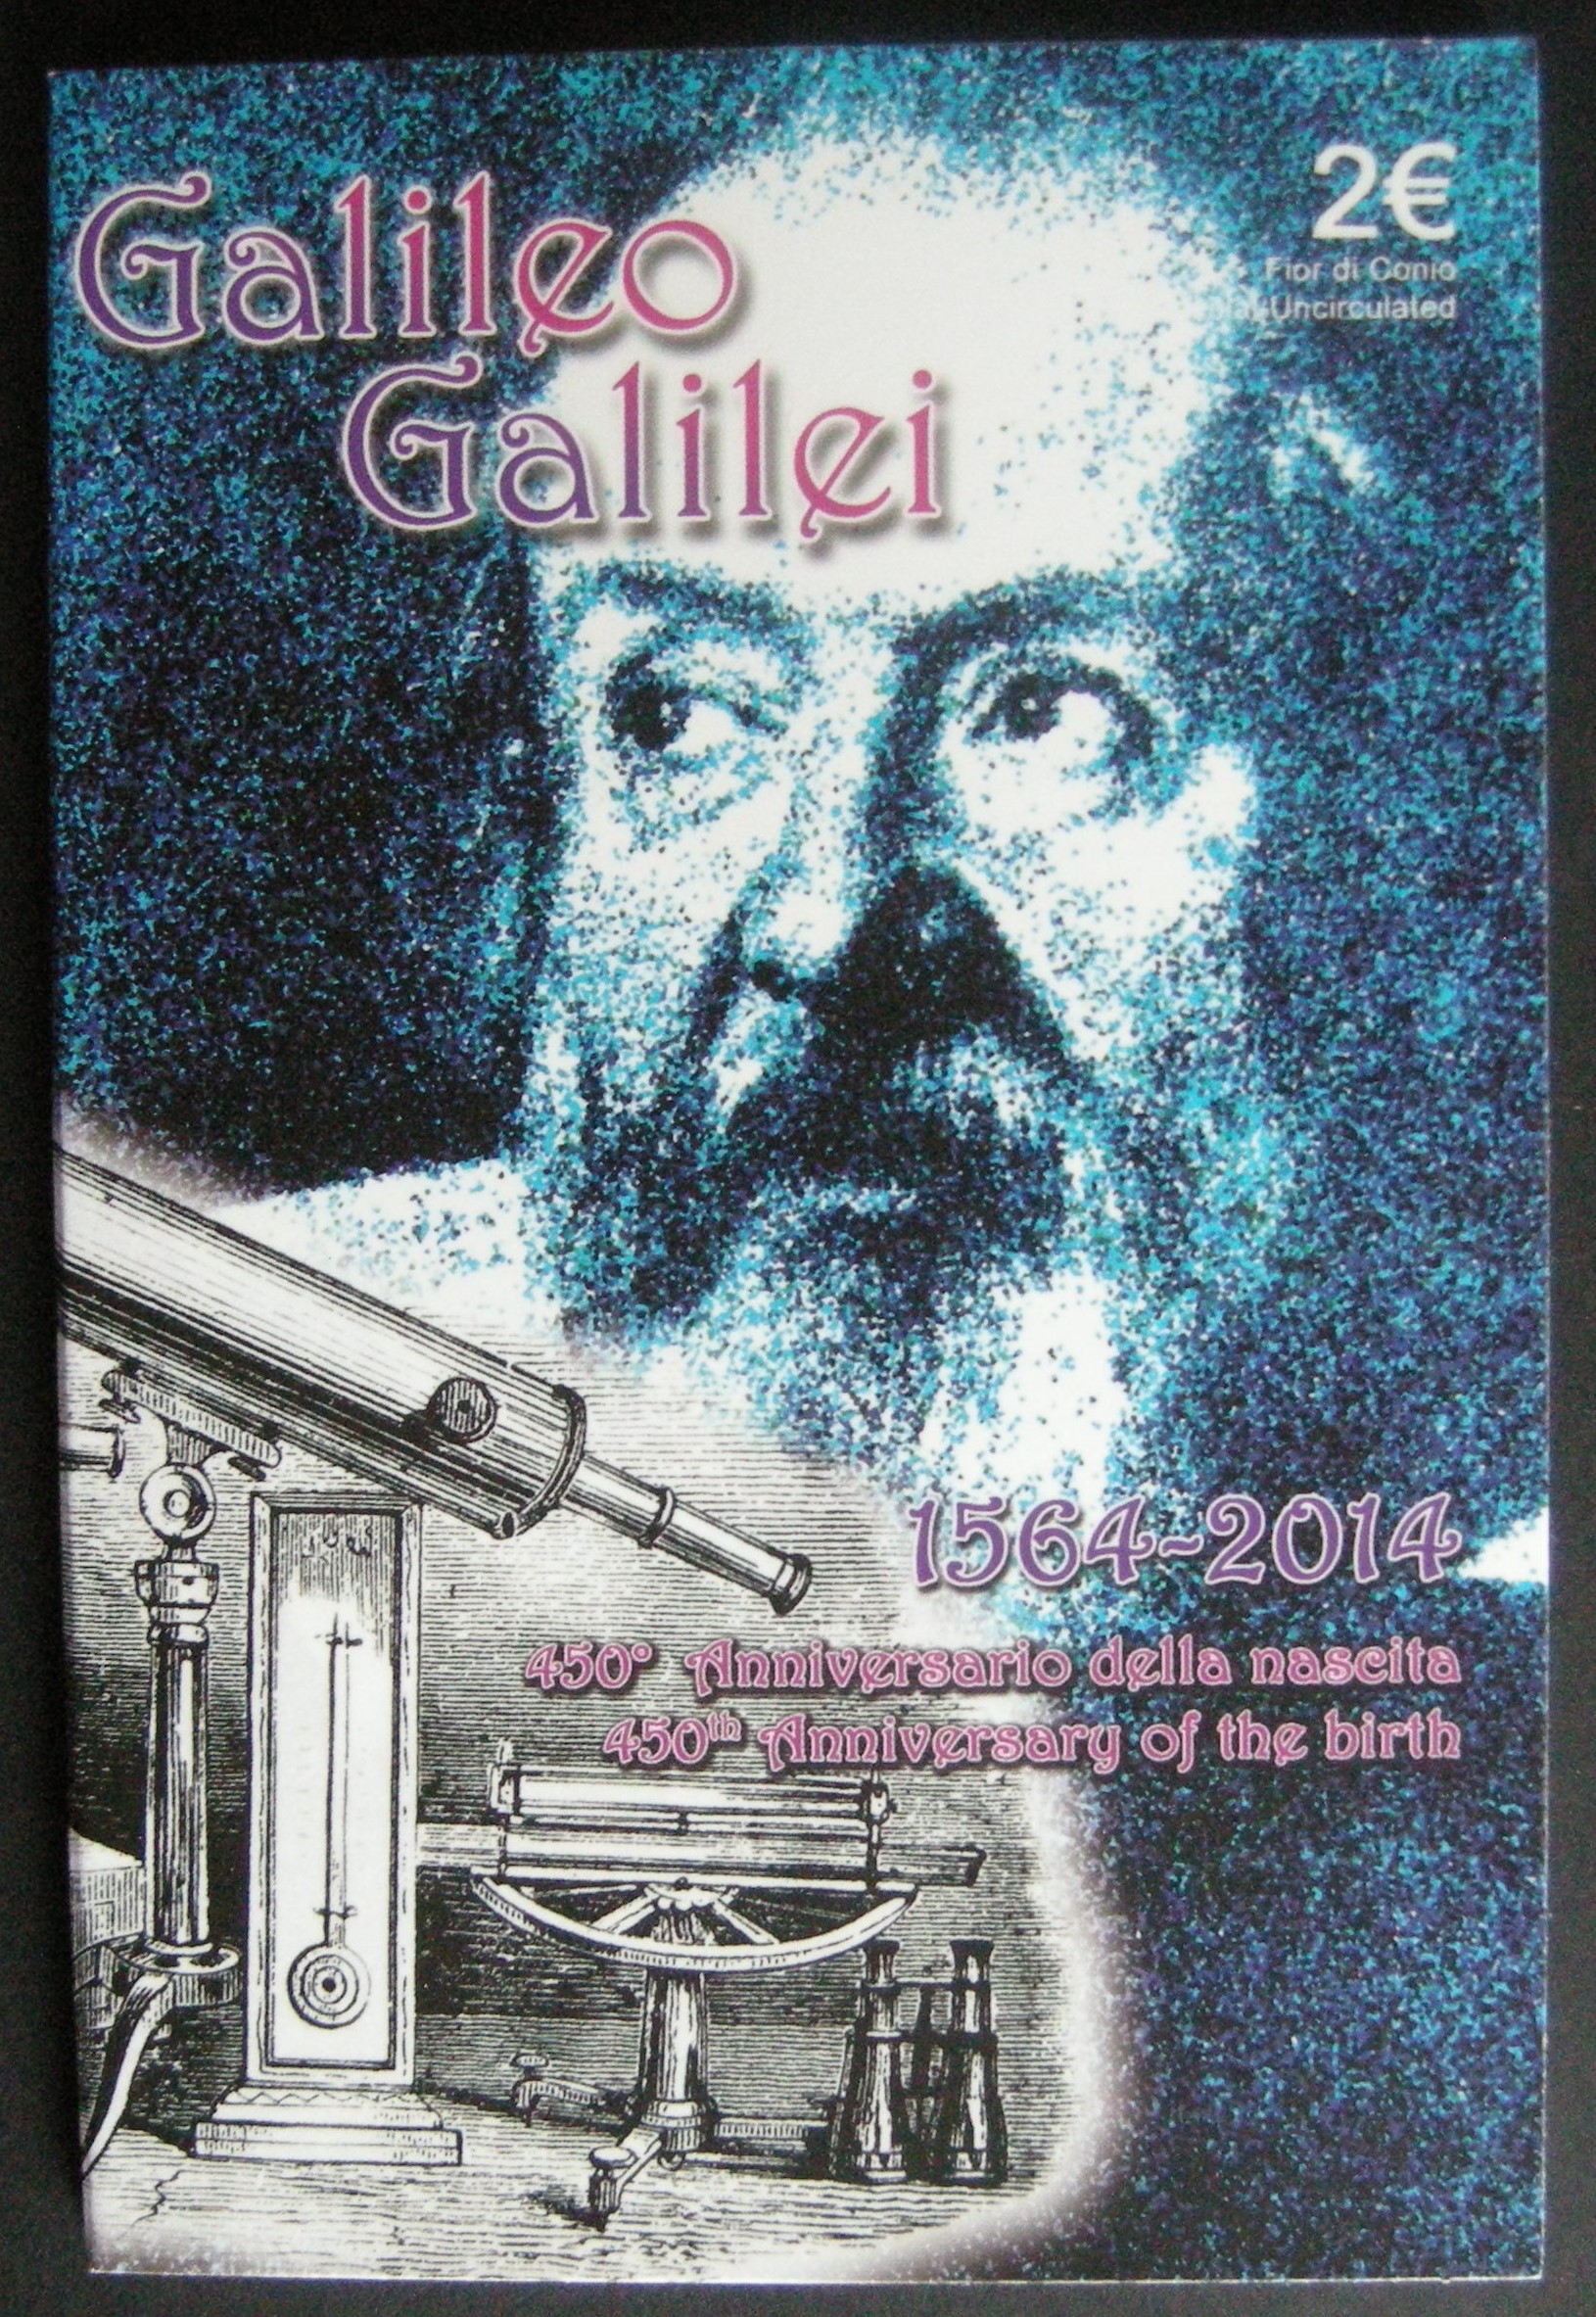 2 Euromunt Italie 2014 Galileo Galilei in blister